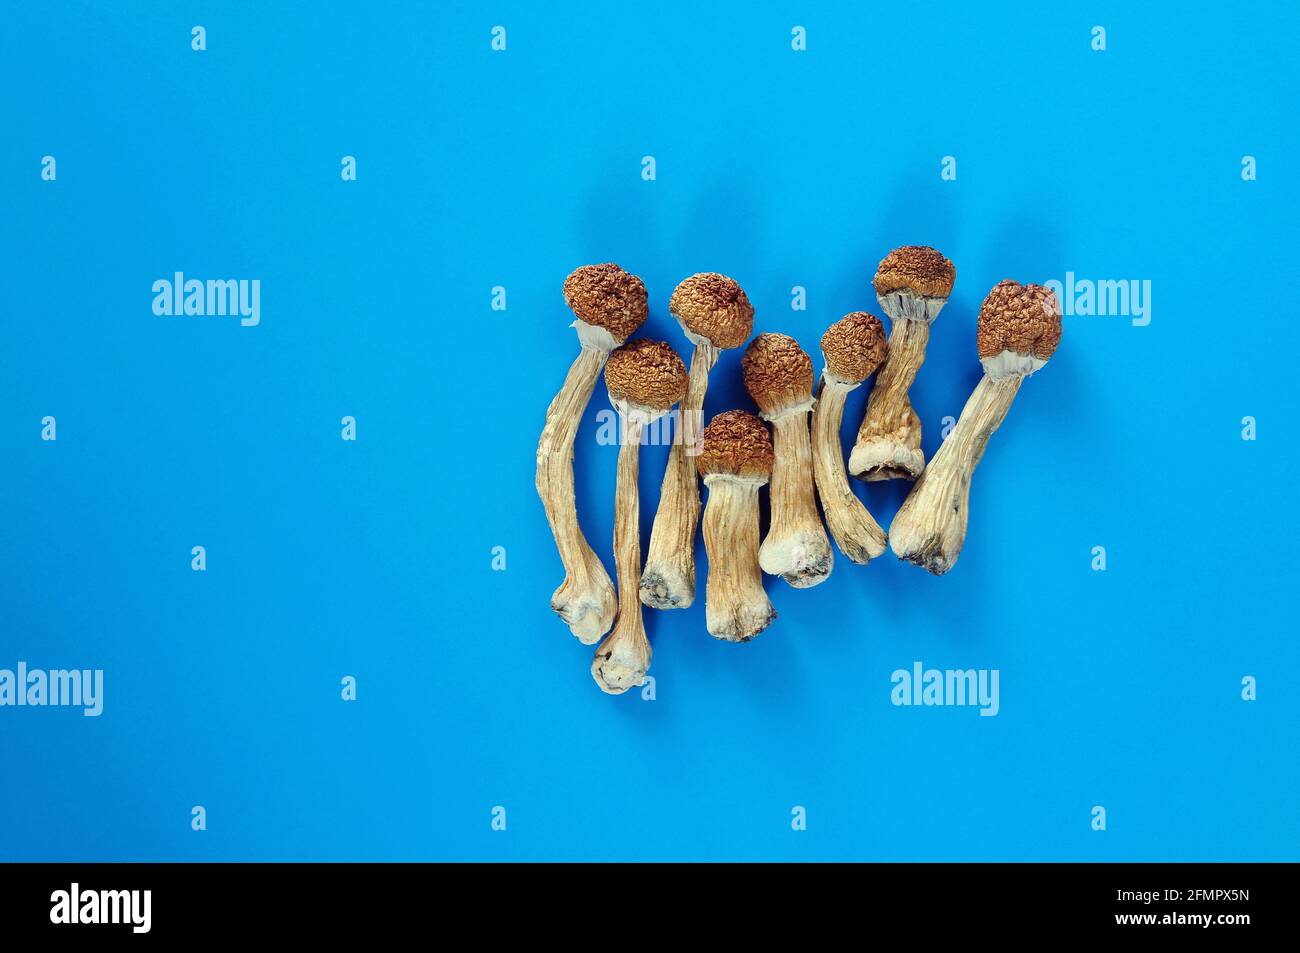 Dry psilocybin mushrooms on bright blue background. Psychedelic magic mushroom Golden Teacher. Medical usage. Microdosing concept. Stock Photo